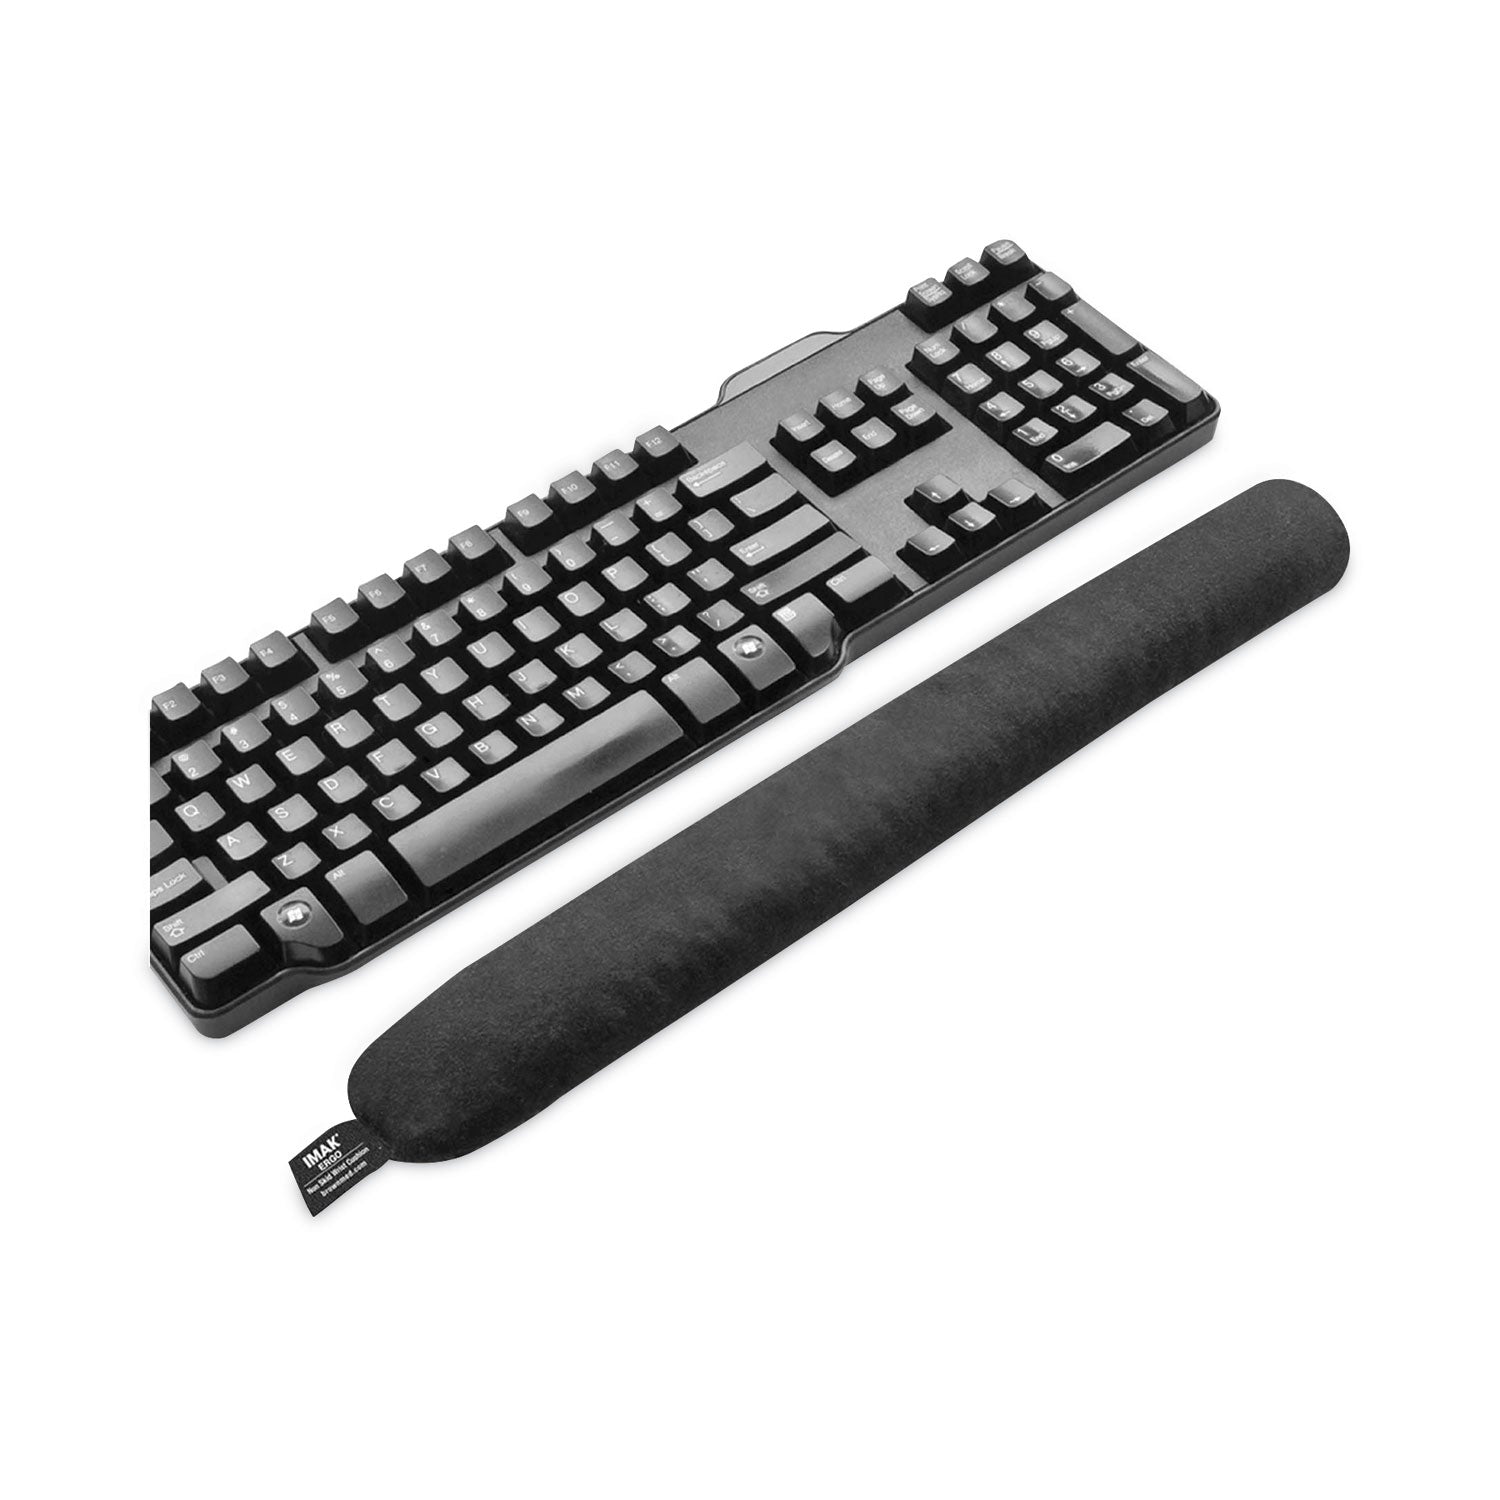 Keyboard Wrist Cushion, 17.75 x 3, Black - 